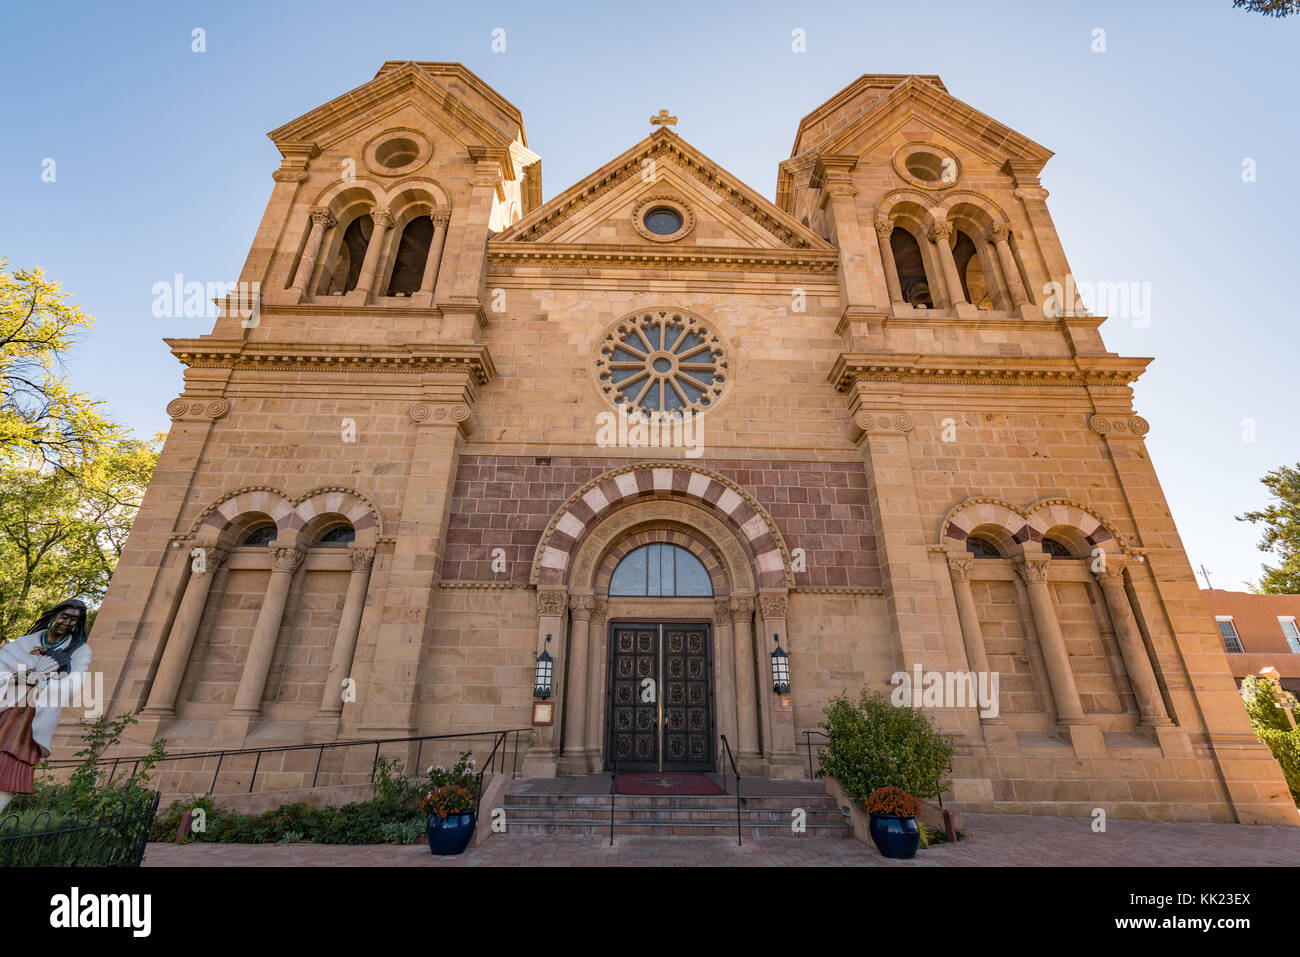 SANTA FE, NM - OCTOBER 13: Historic Cathedral Basilica of St Francis Assisi in Santa Fe, New Mexico on October 13, 2017 Stock Photo